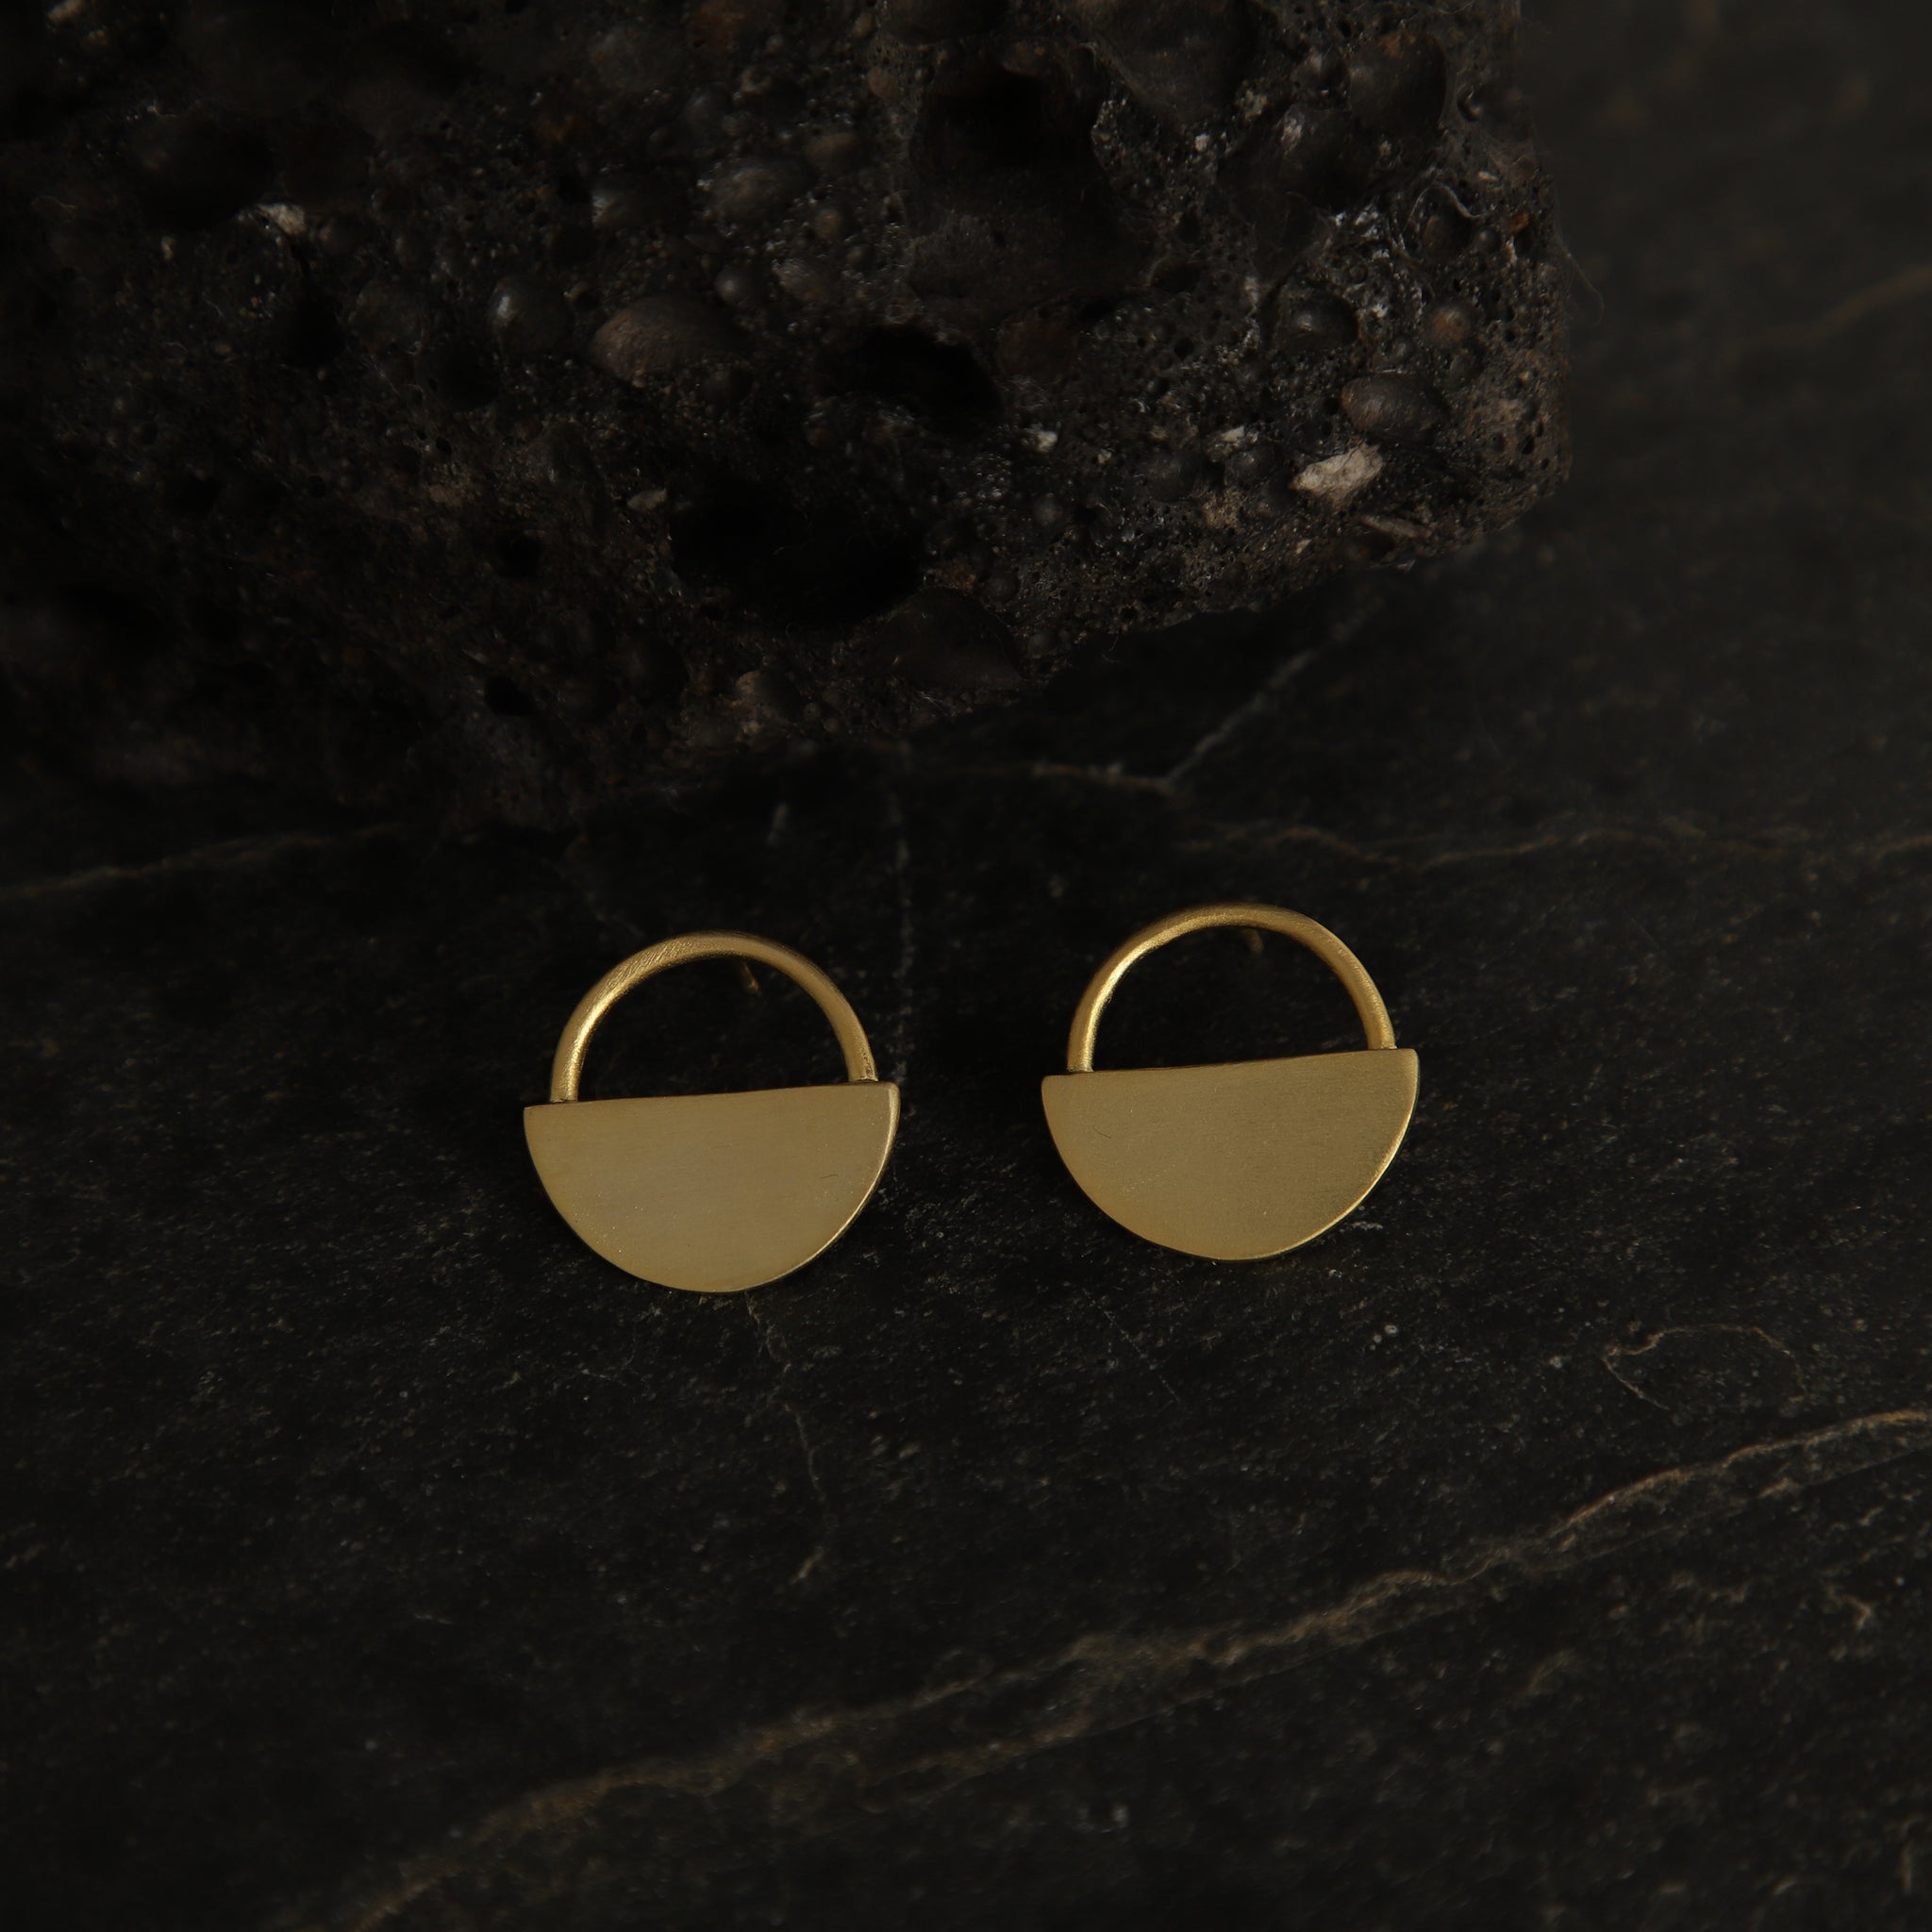 jewelry - berserk - Gold Plated Half Moon studs